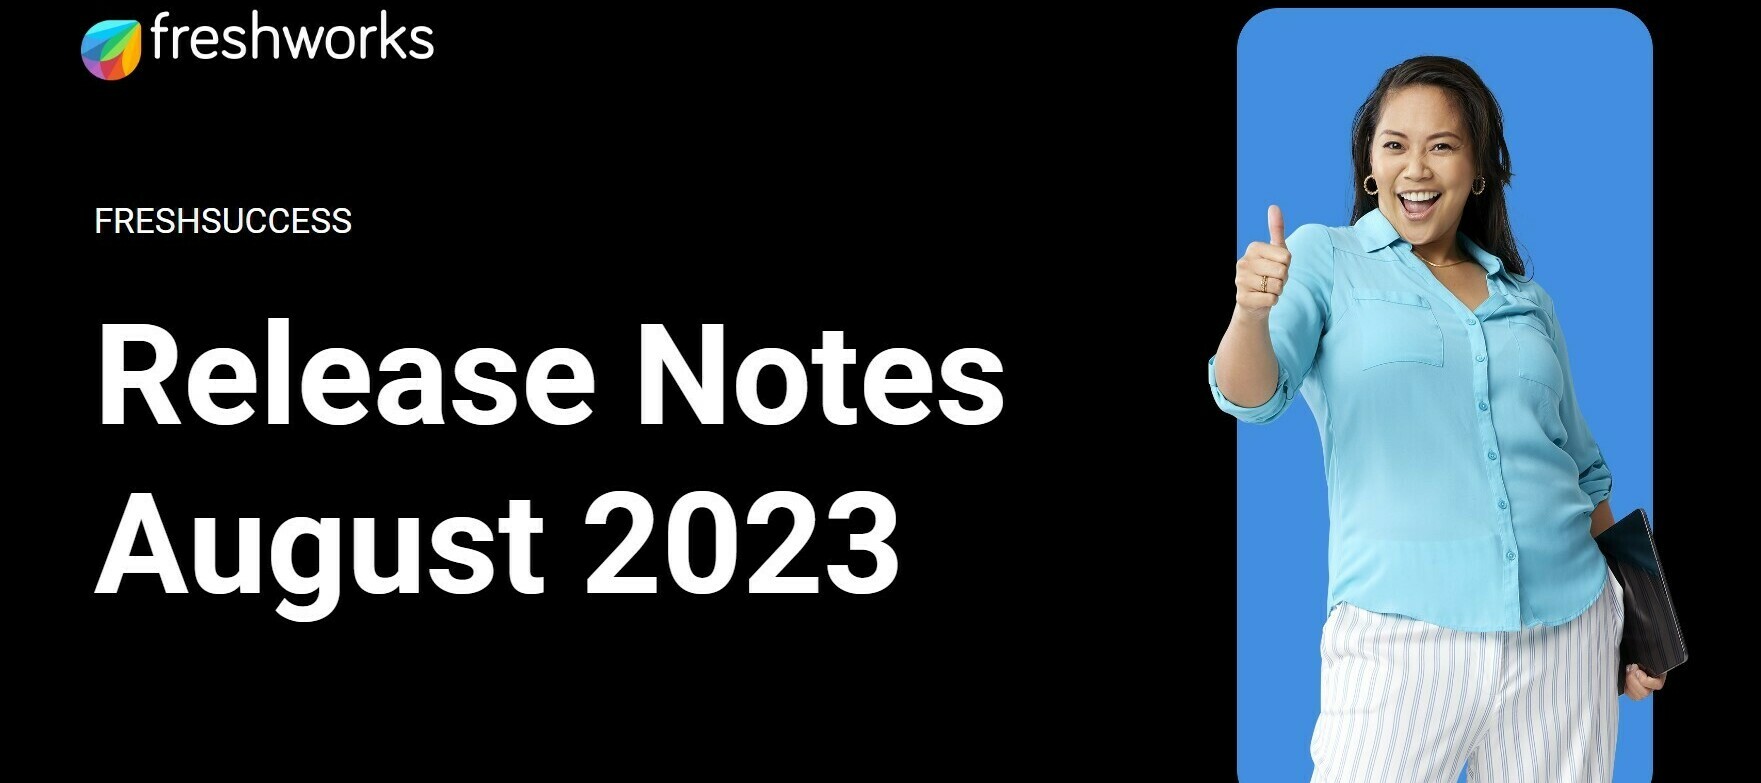 Freshsuccess Release Notes - August 2023